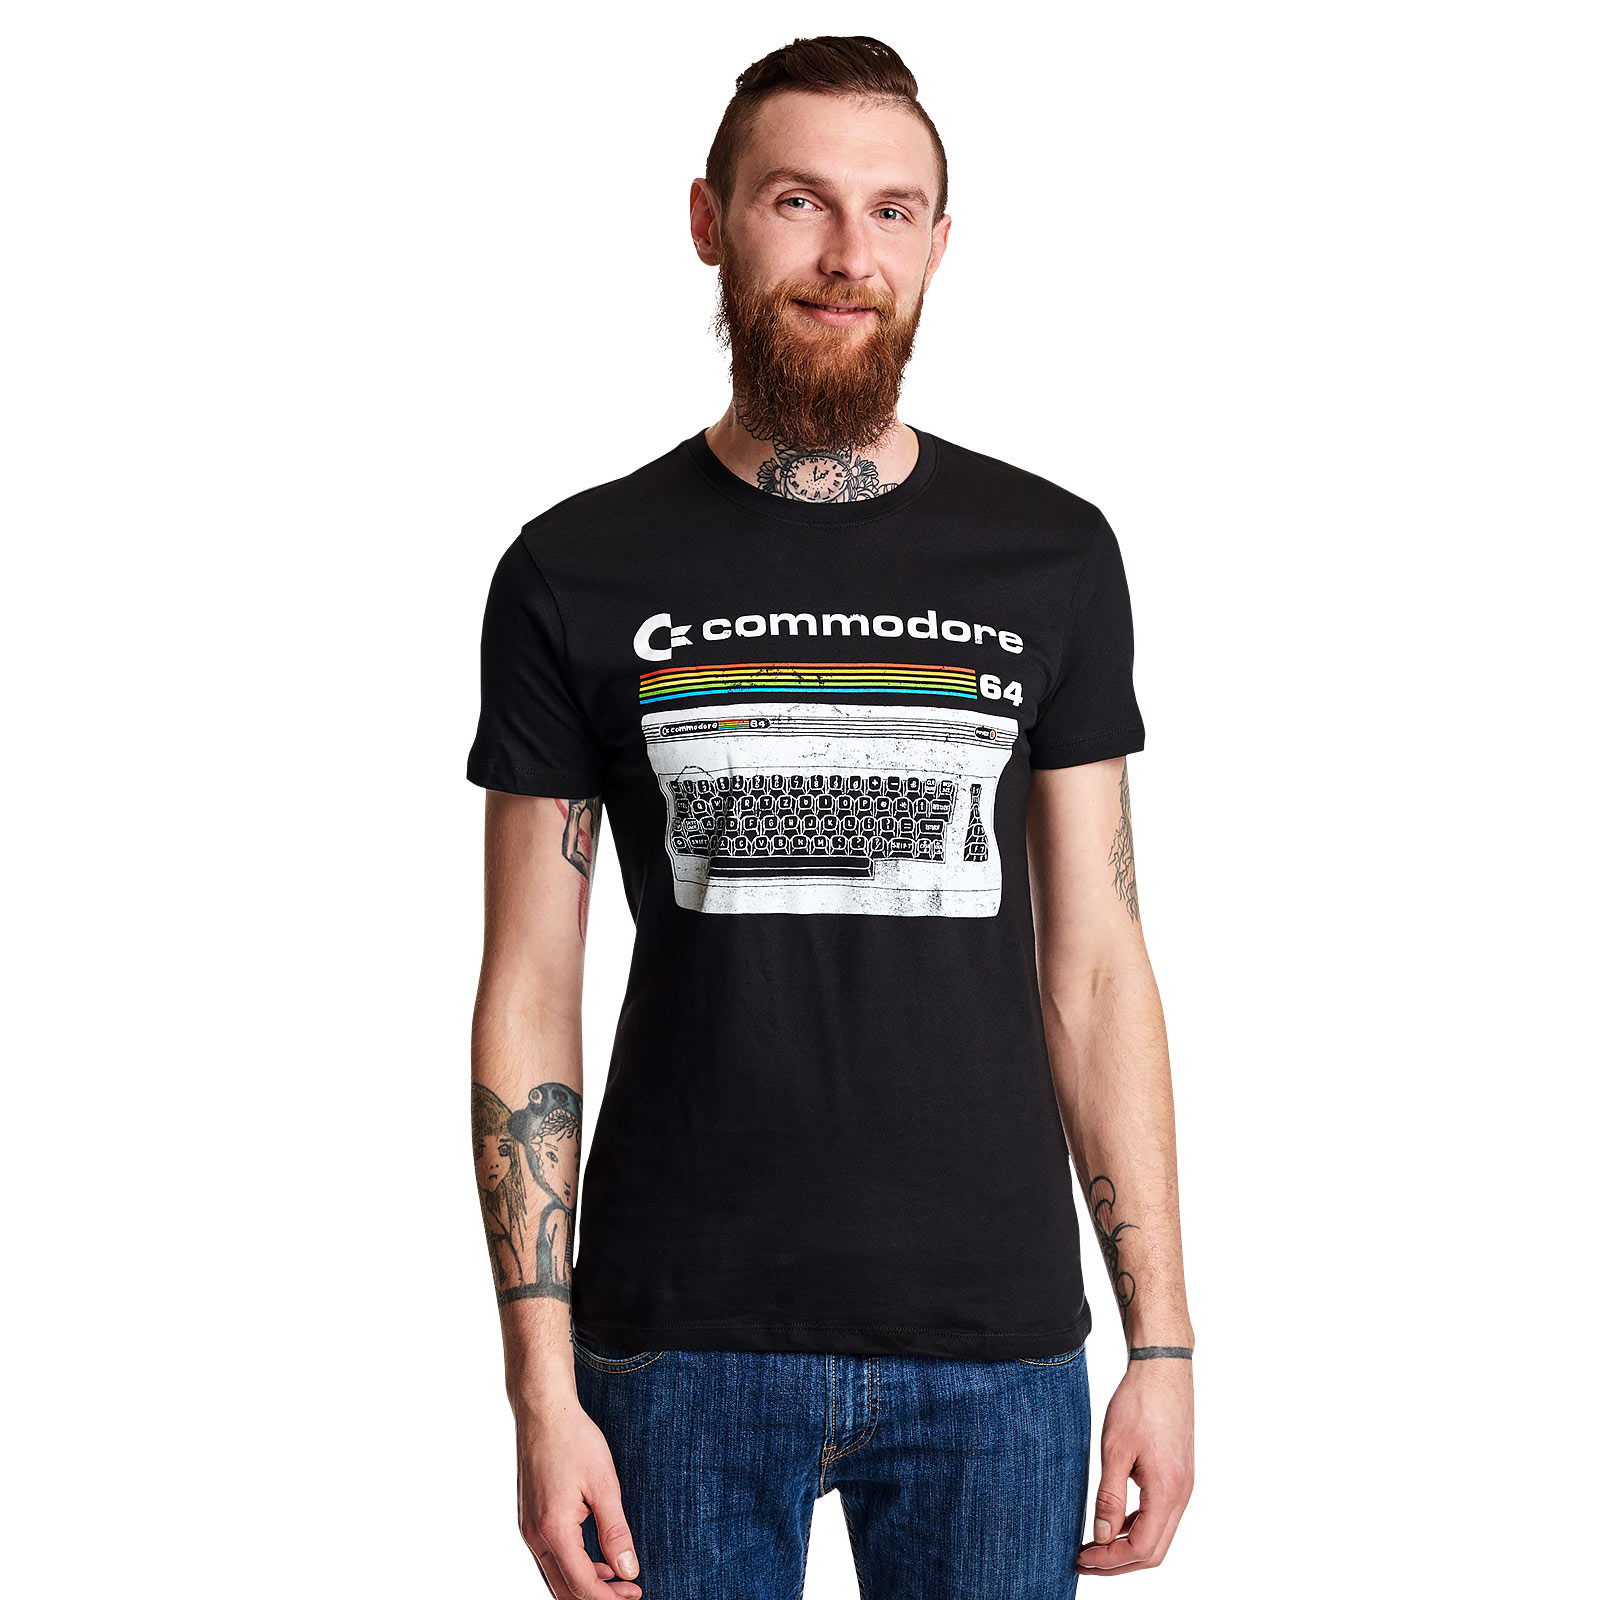 Commodore 64 - Classic Keyboard T-Shirt schwarz